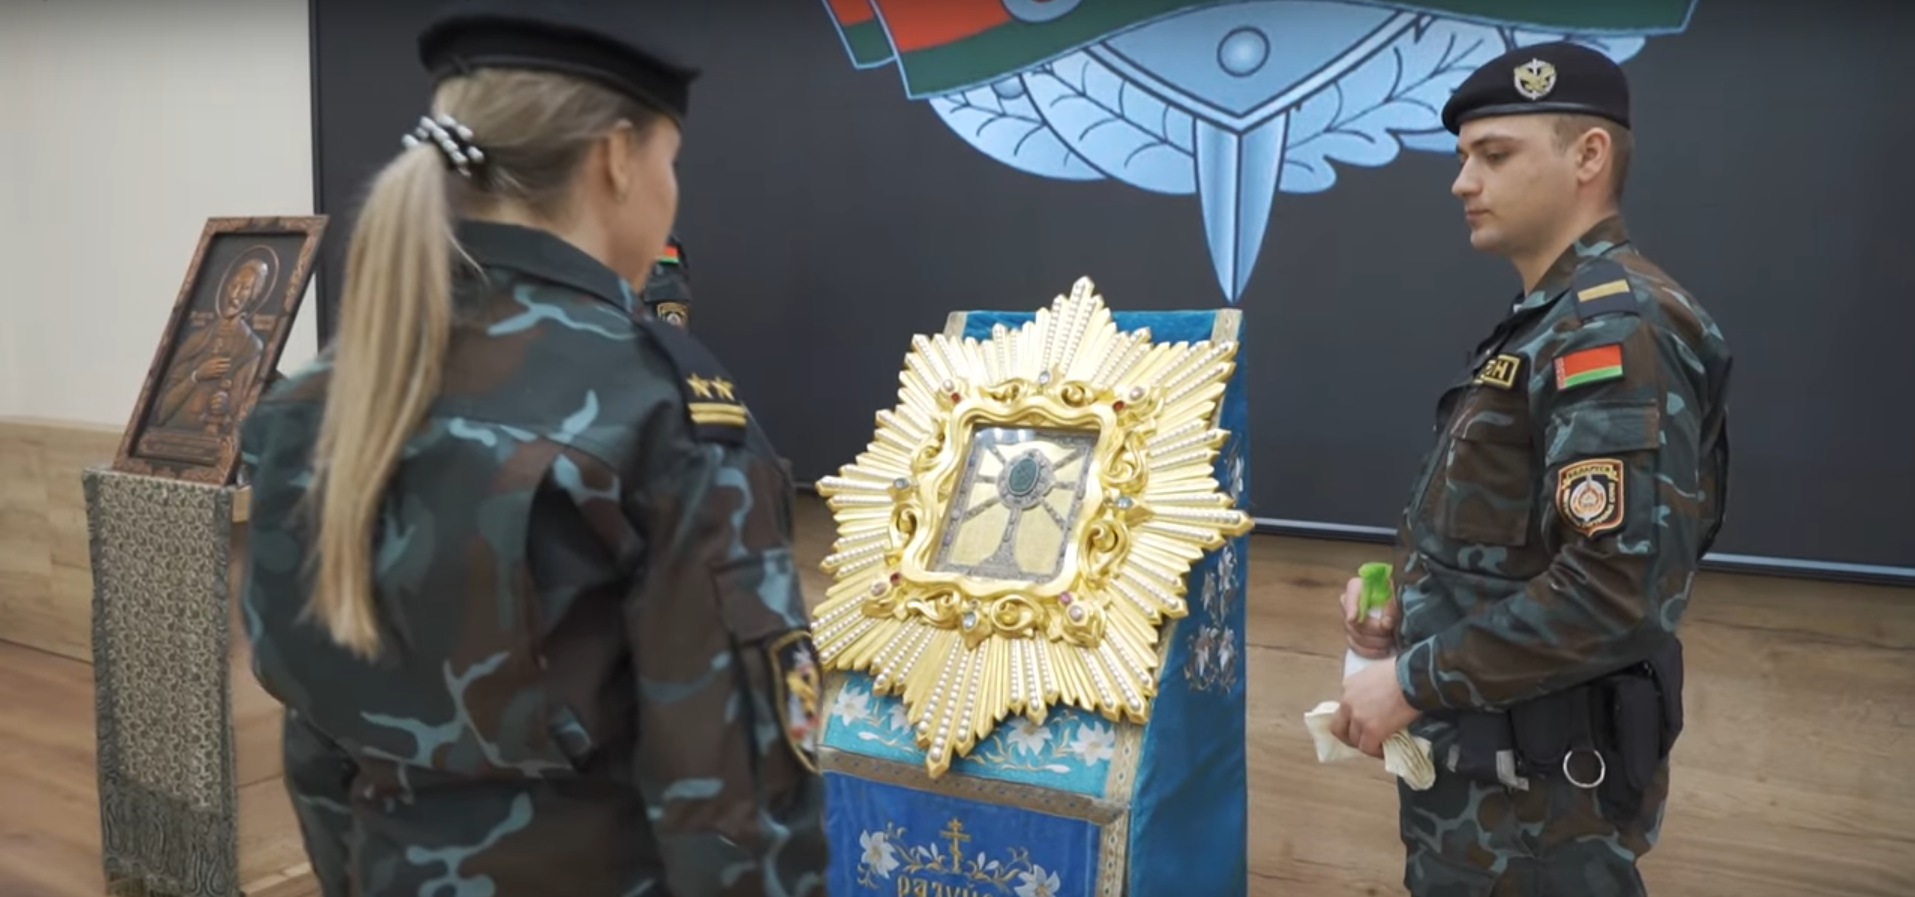 Чудотворную икону Богоматери доставили на базу ОМОН в Минске